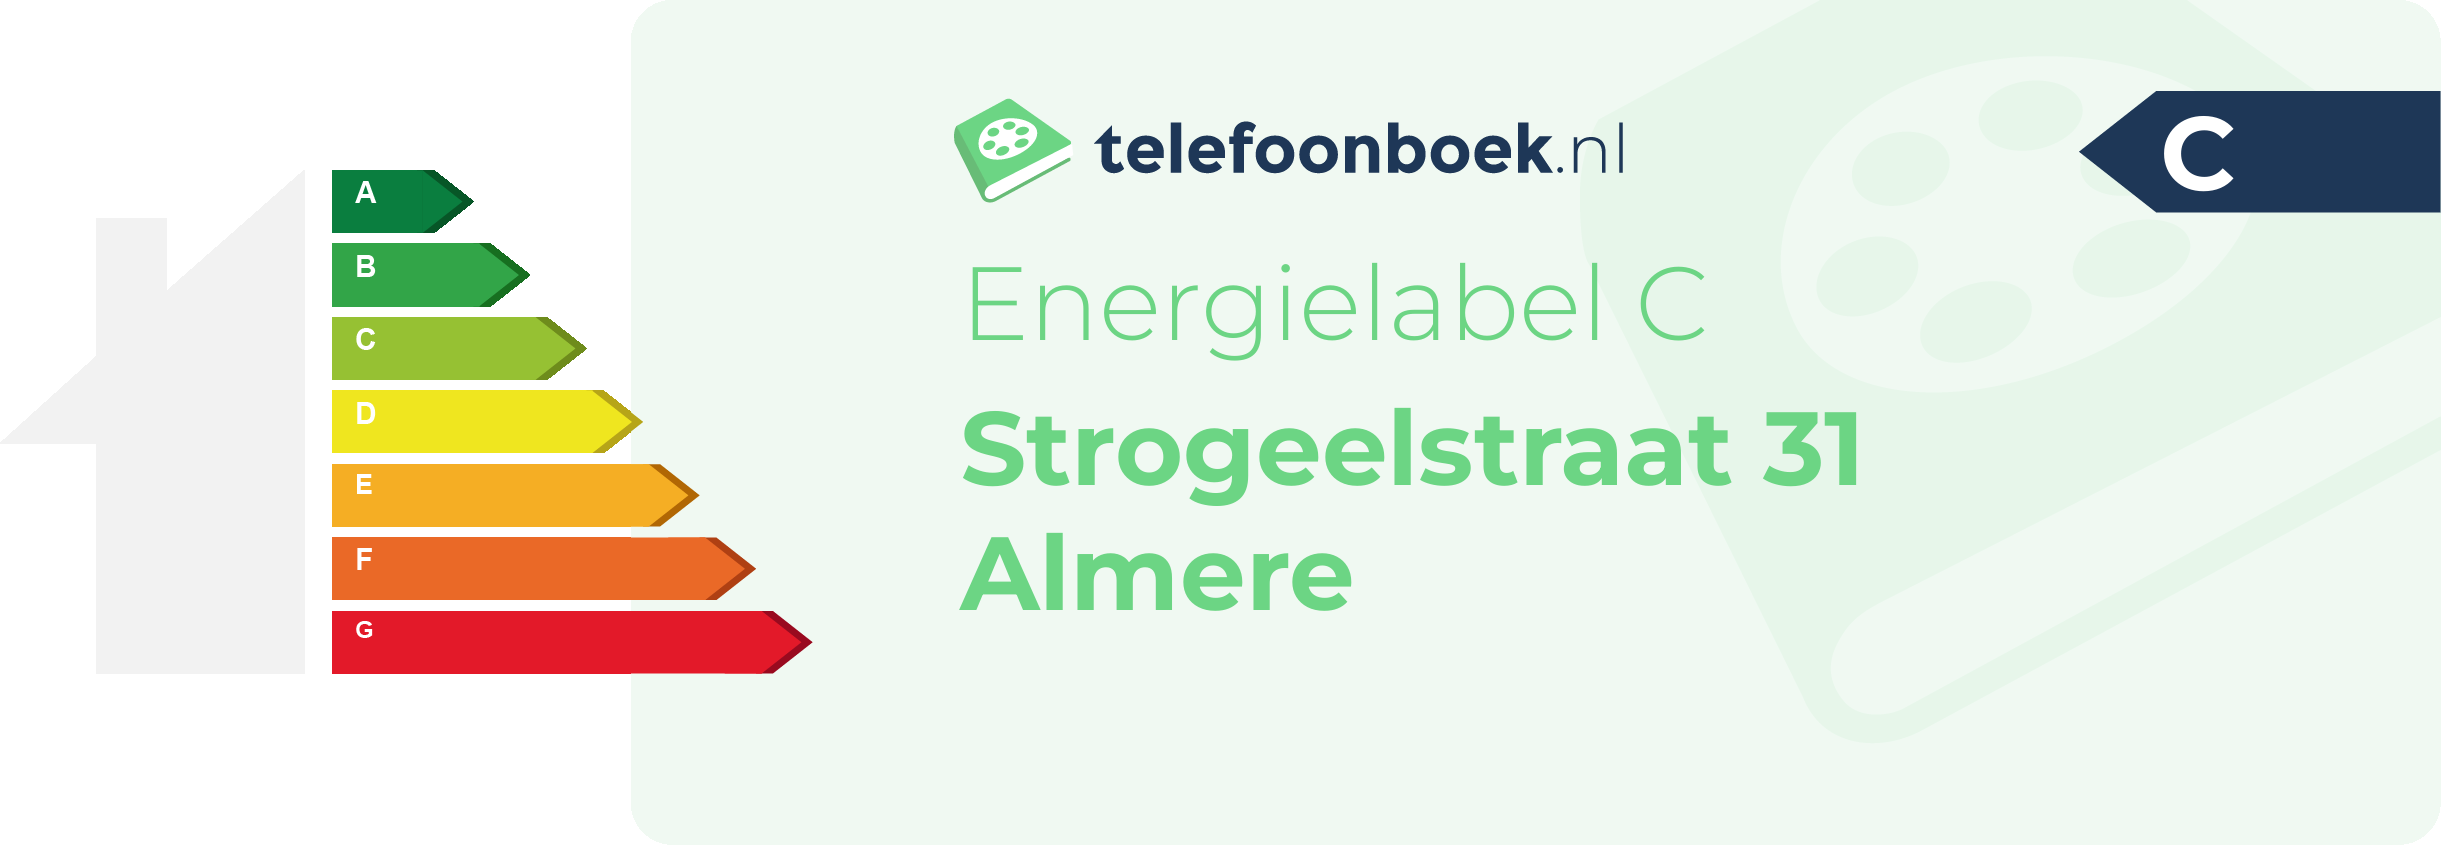 Energielabel Strogeelstraat 31 Almere